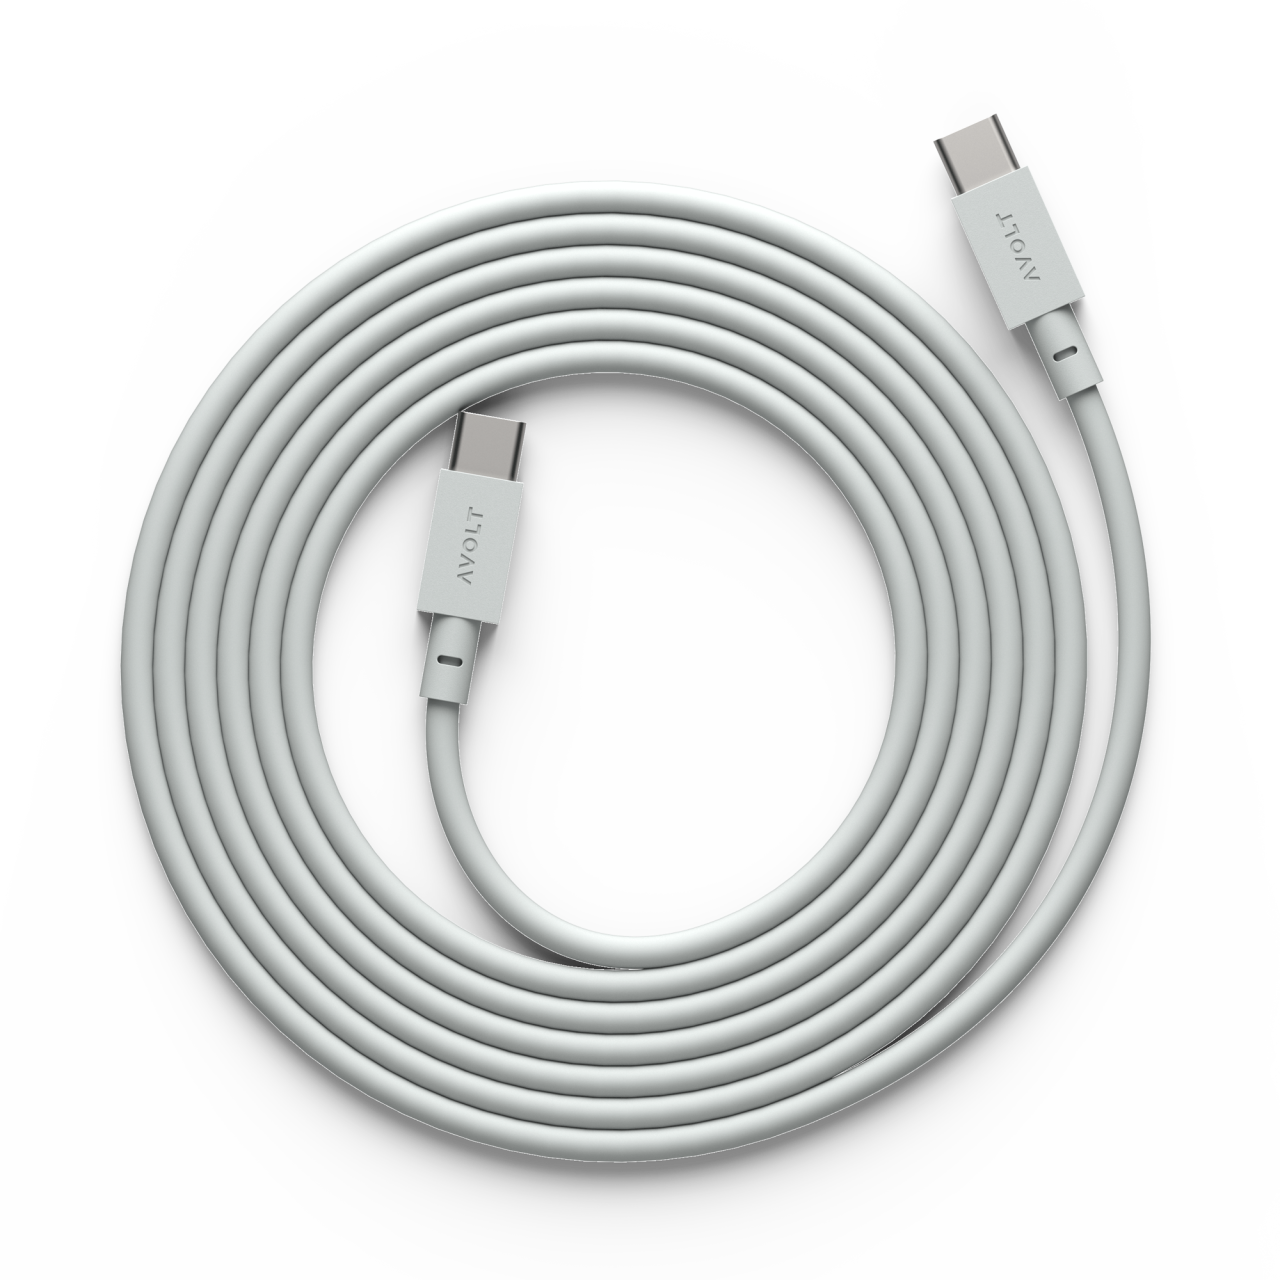 Cable 1 USB-C to USB-C Ladekabel